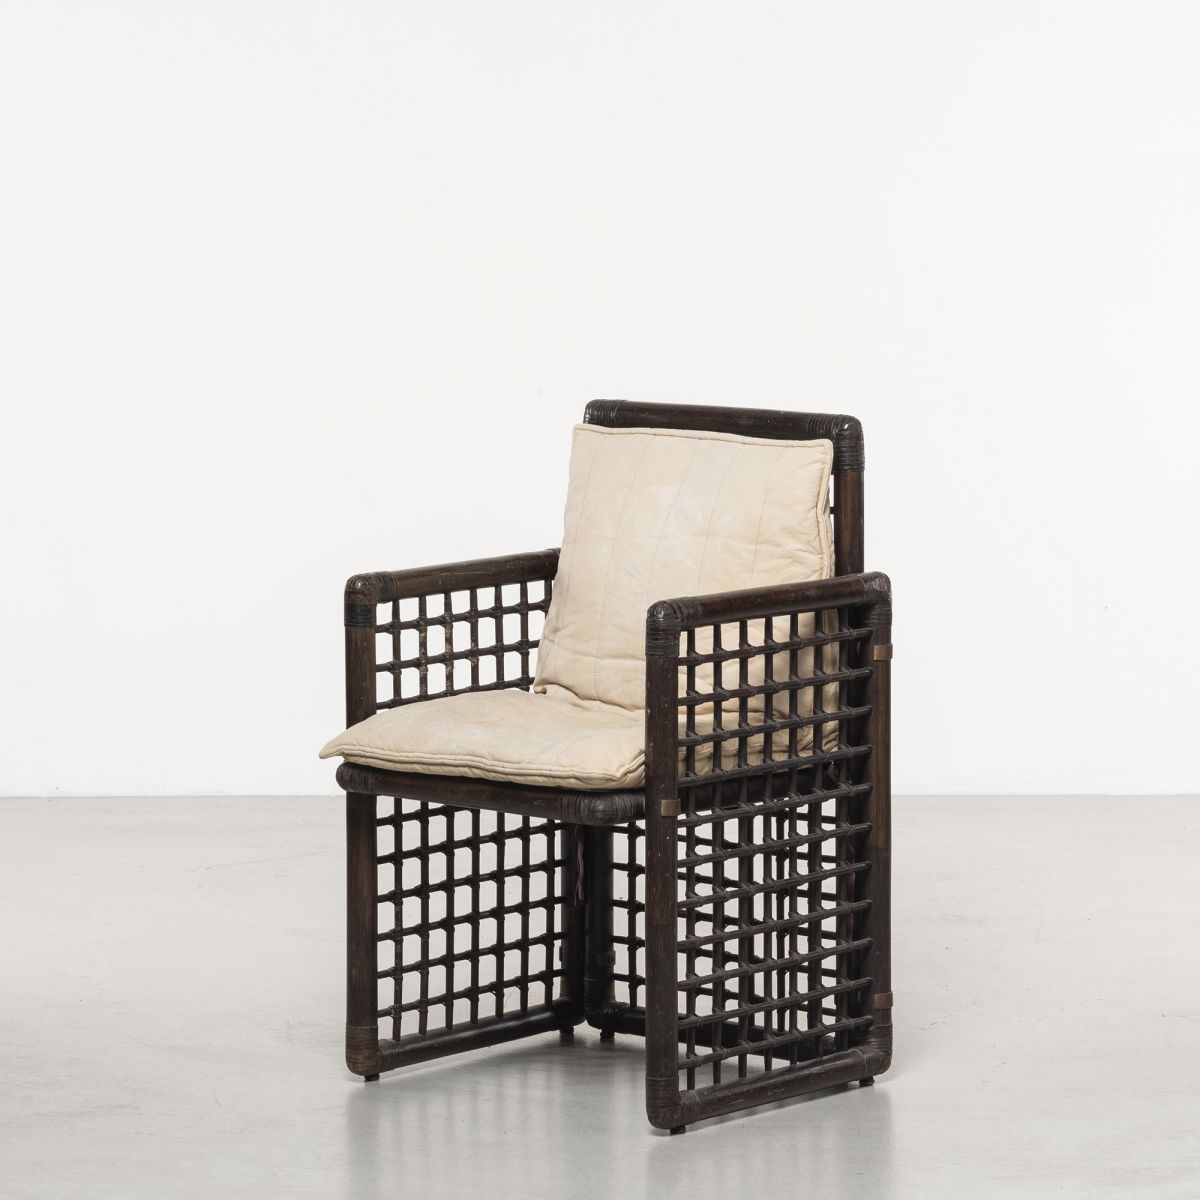 Chair Basilan series Afra and Tobia Scarpa pic-1